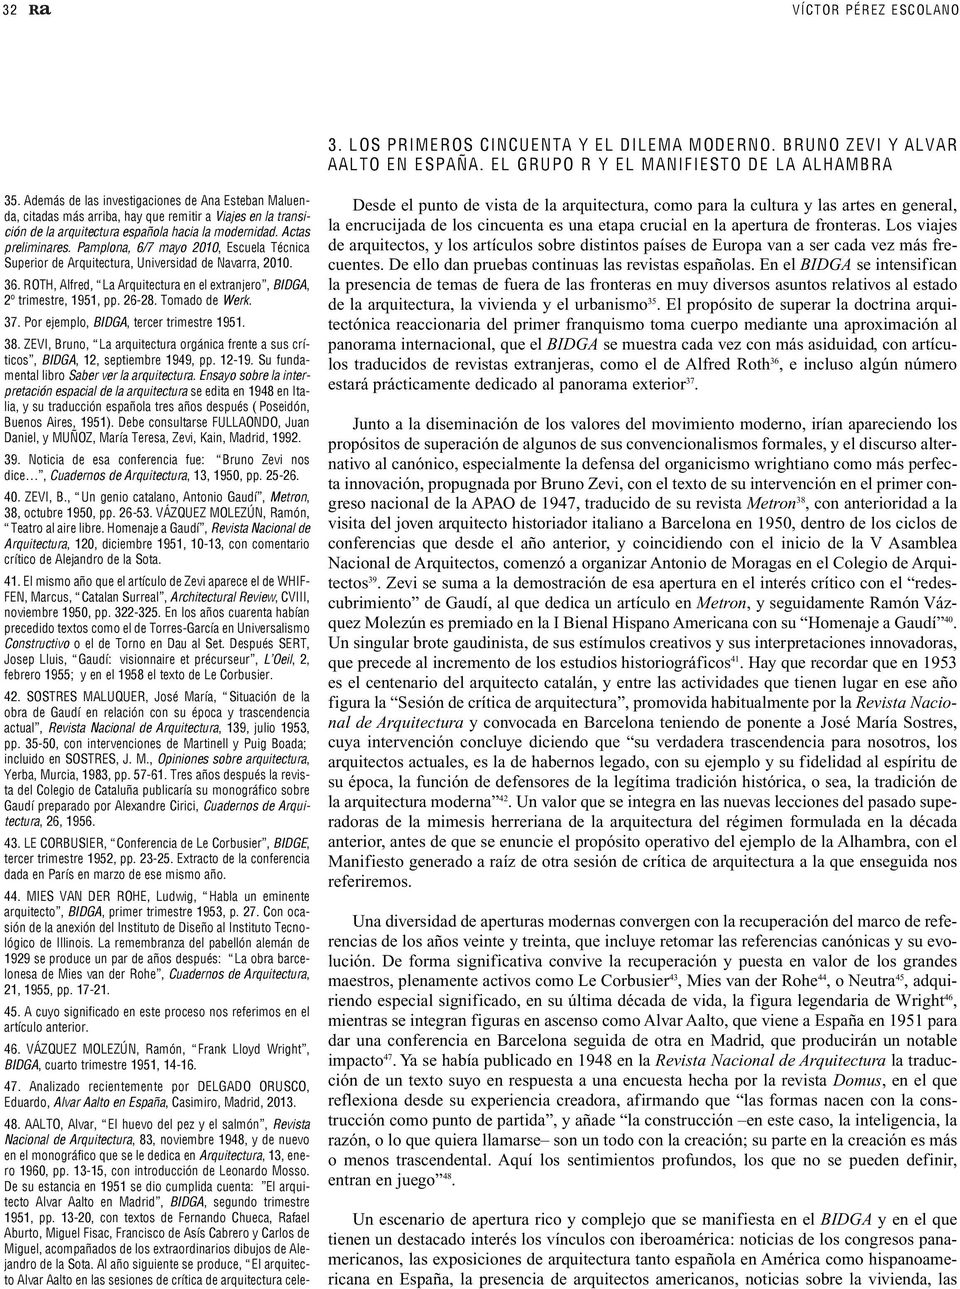 Pamplona, 6/7 mayo 2010, Escuela técnica superior de Arquitectura, universidad de navarra, 2010. 36. RotH, Alfred, La Arquitectura en el extranjero, BIDGA, 2º trimestre, 1951, pp. 26-28.